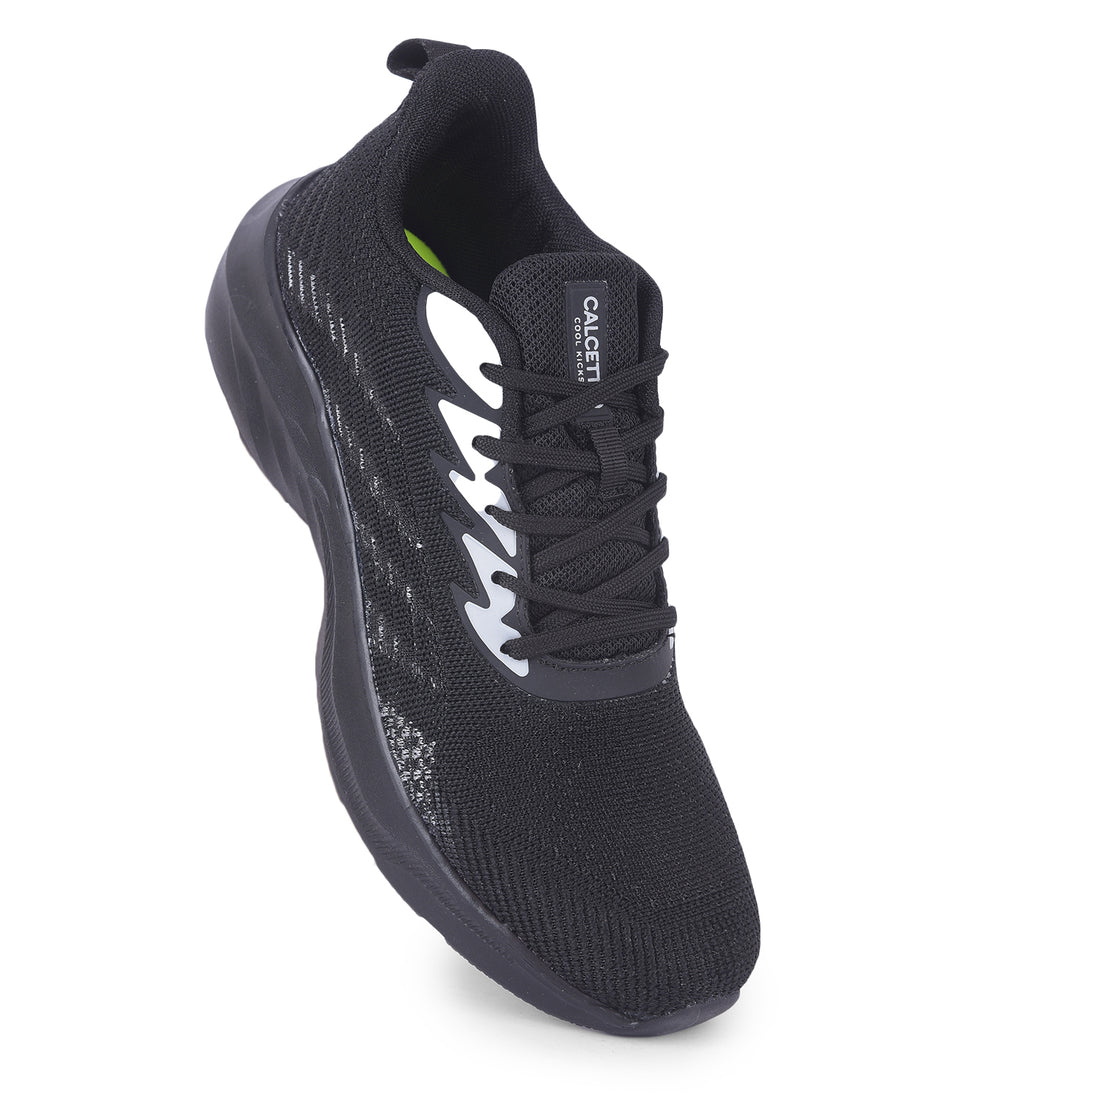 Calcetto CLT-2045 Black Sports Shoes For Men